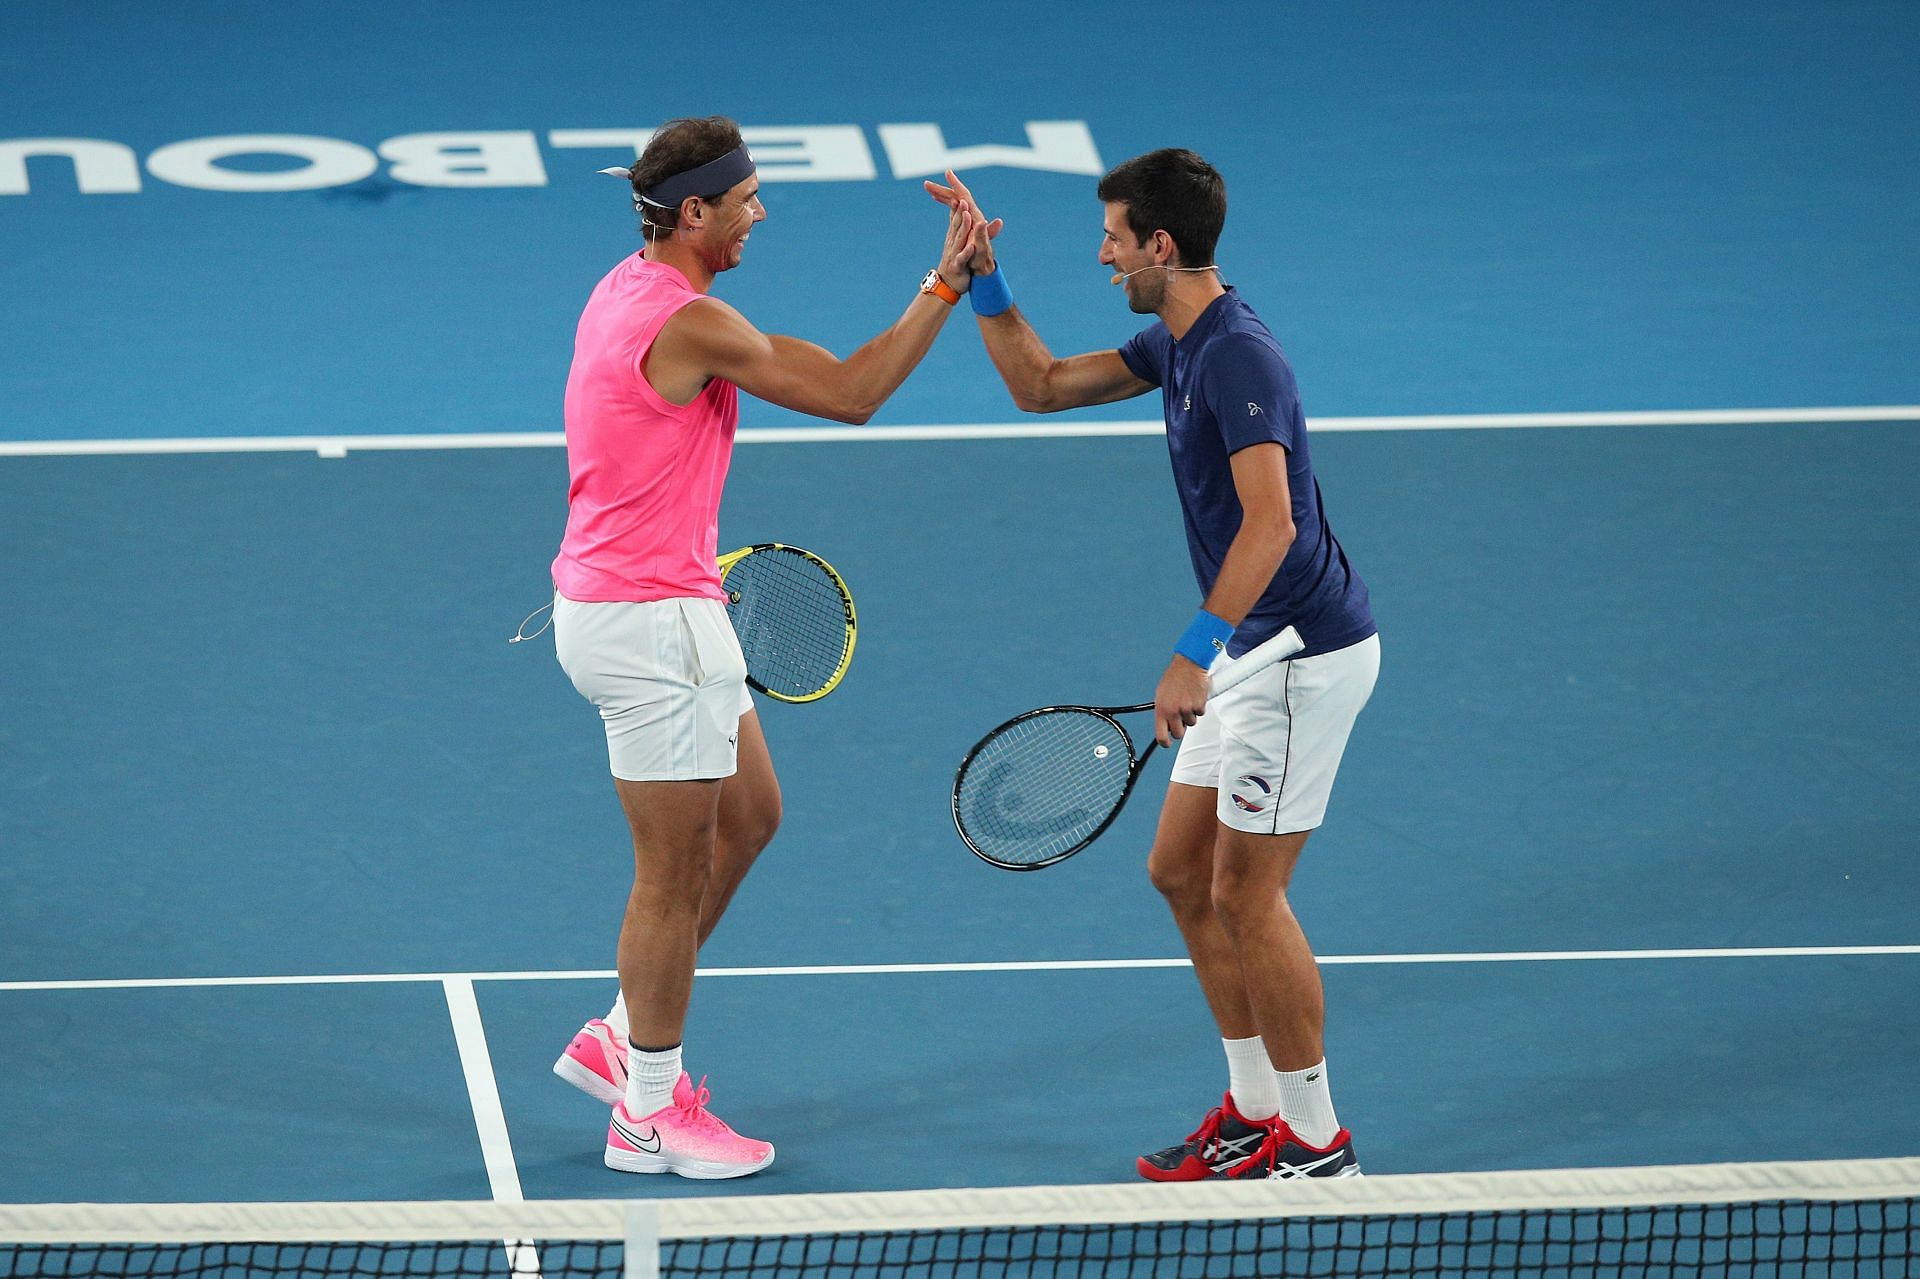 Novak Djokovic and Rafael Nadal have won all the Grand Slams this year